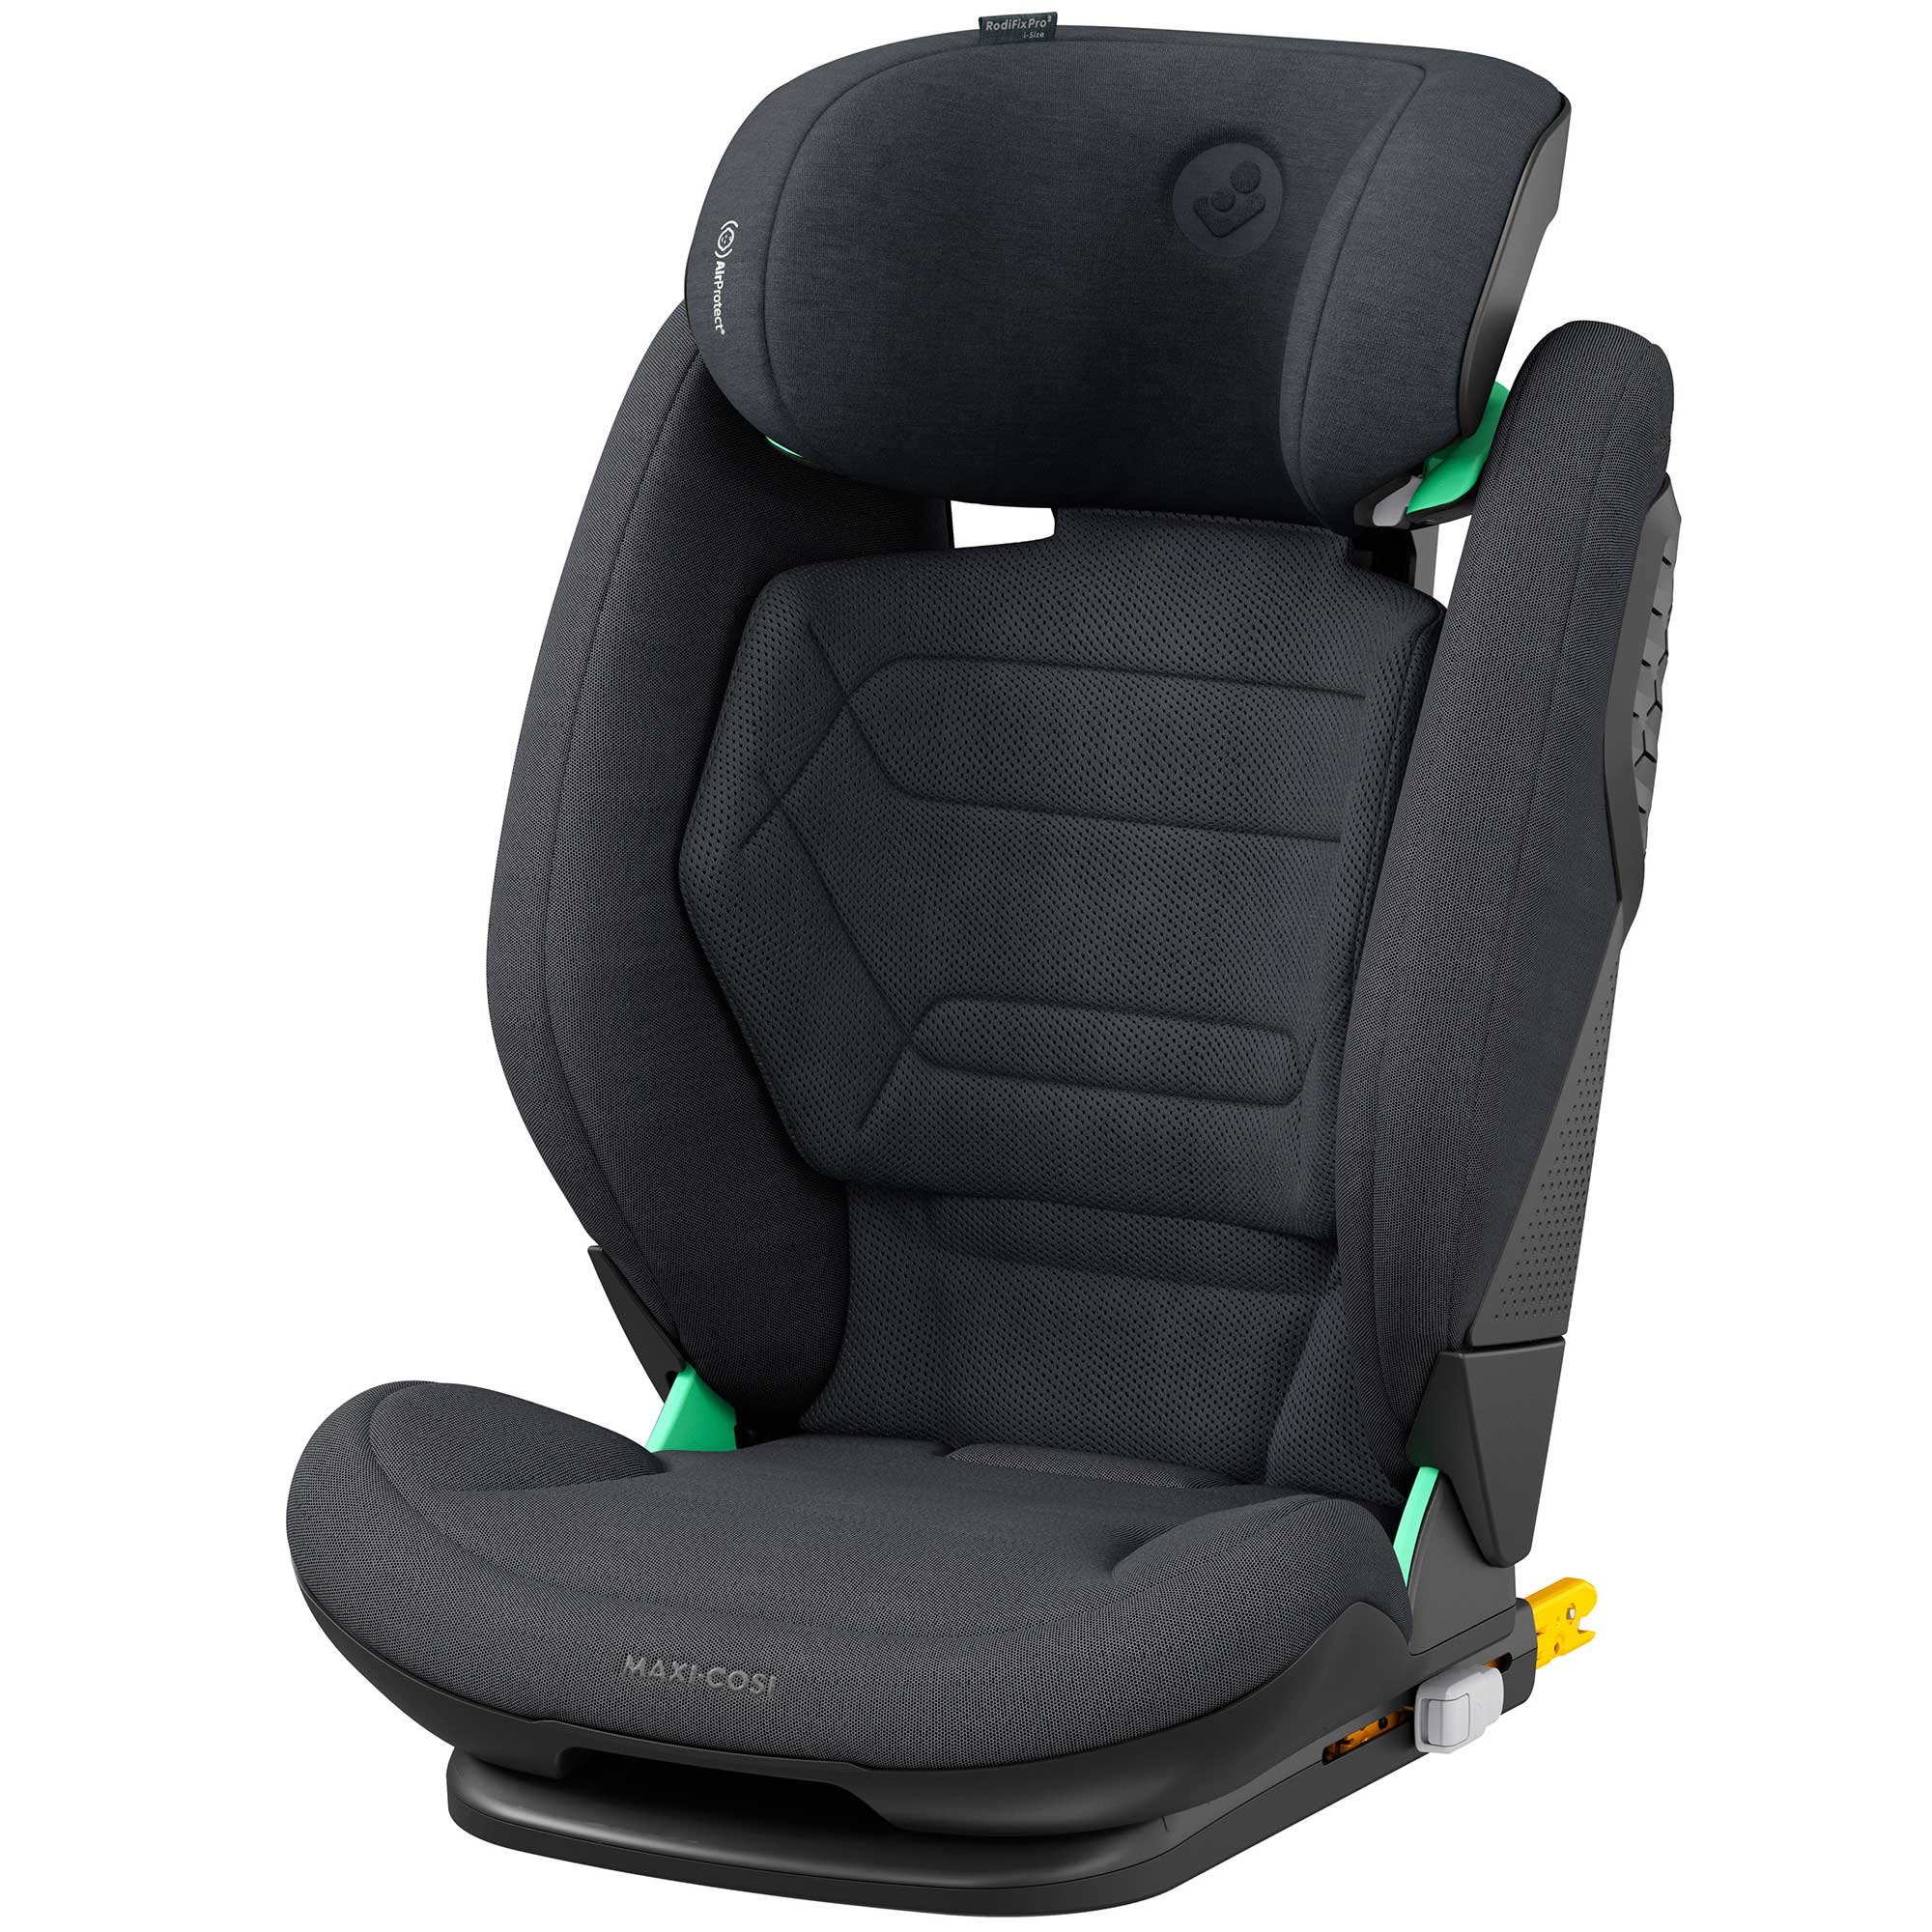 Maxi-Cosi Rodifix Pro 2 i-size Booster Seat in Authentic Graphite Highback Booster Seats 8800550111 8712930183518